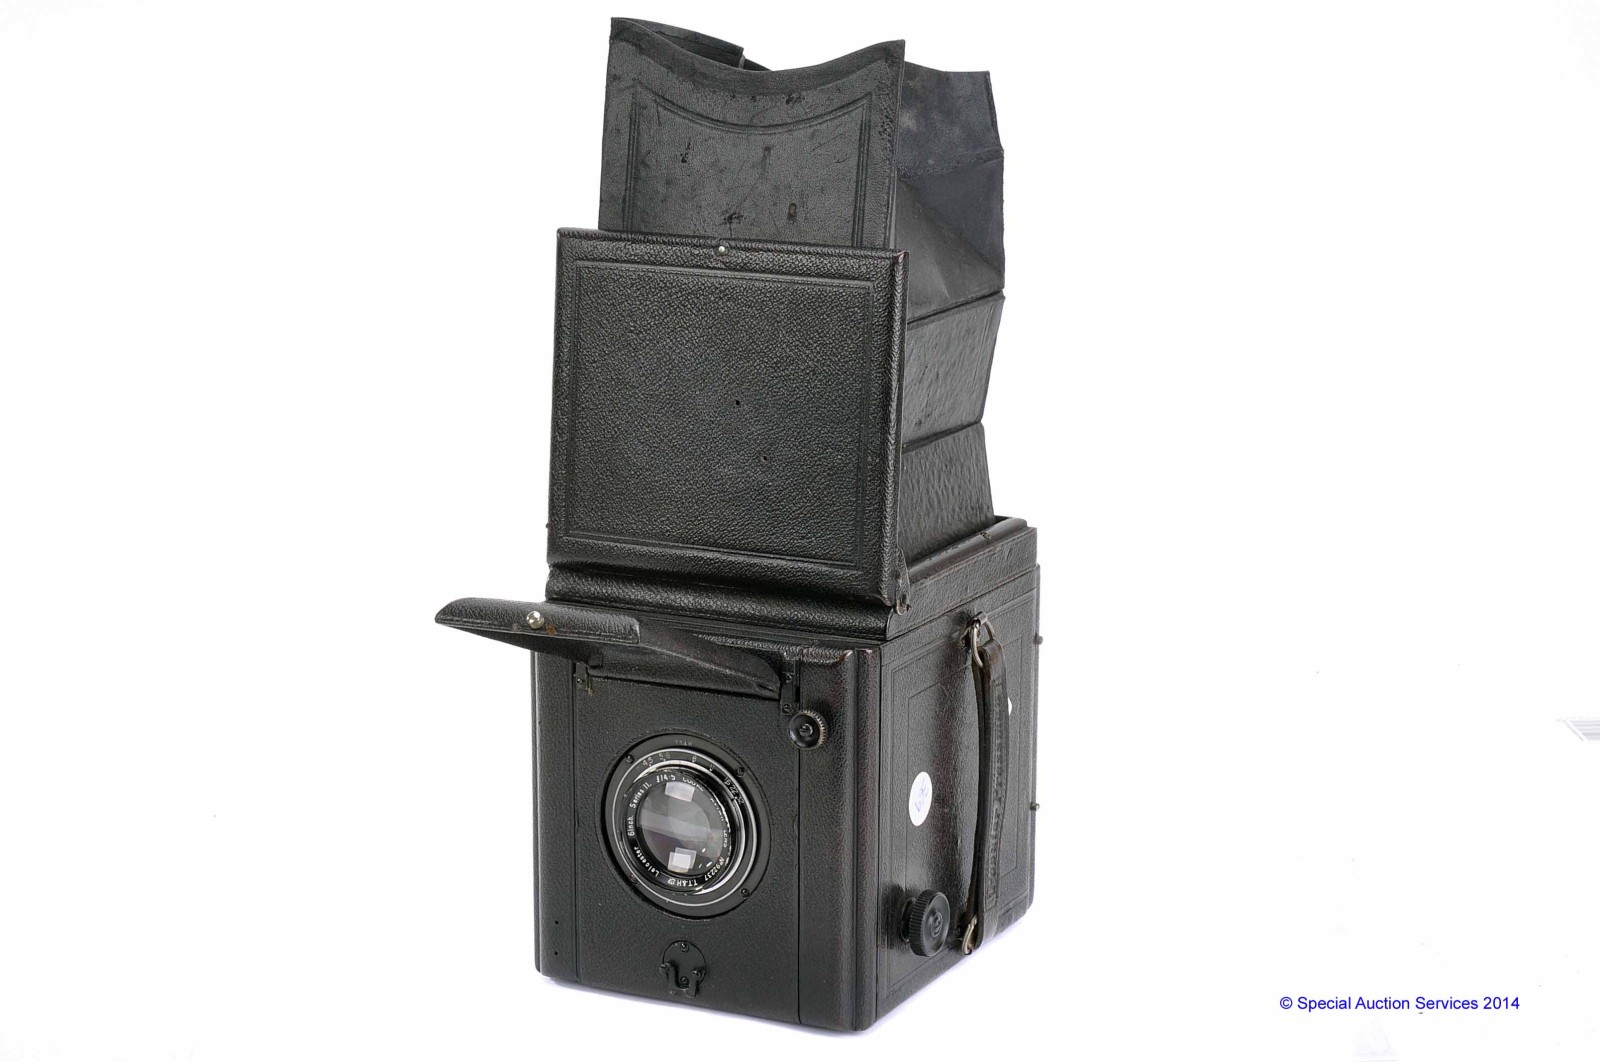 A Butcher`s Popular Pressman Camera, with Cooke Aviar Series II f/4.5 6" lens, body, VG, shutter